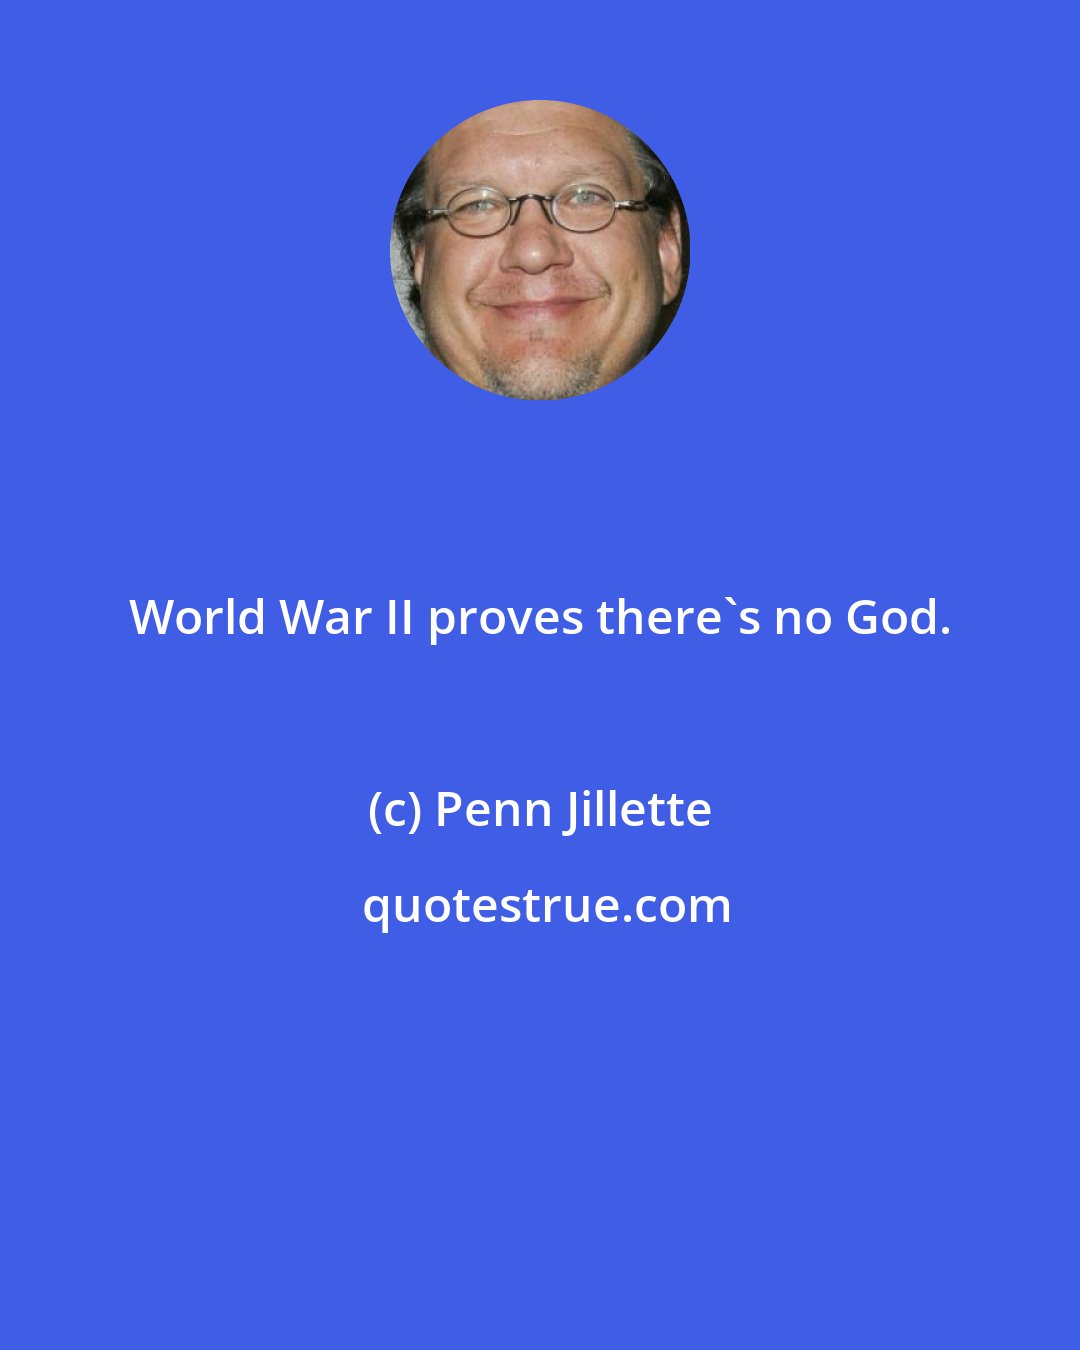 Penn Jillette: World War II proves there's no God.